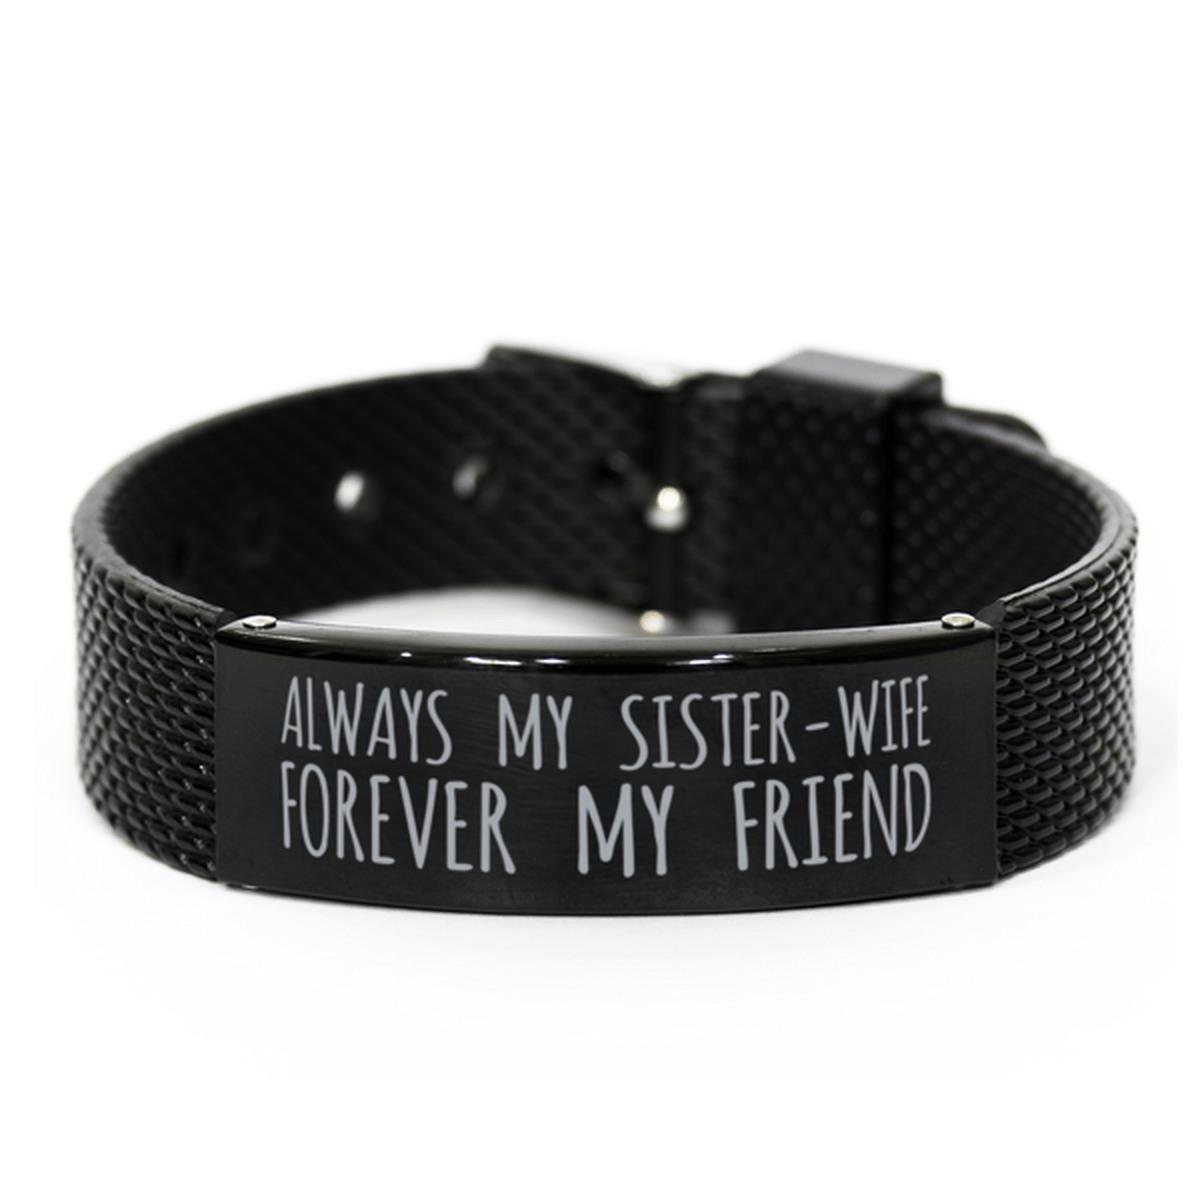 Inspirational Sister Wife Black Shark Mesh Bracelet, Always My Sister Wife Forever My Friend, Best Birthday Gifts for Family Friends